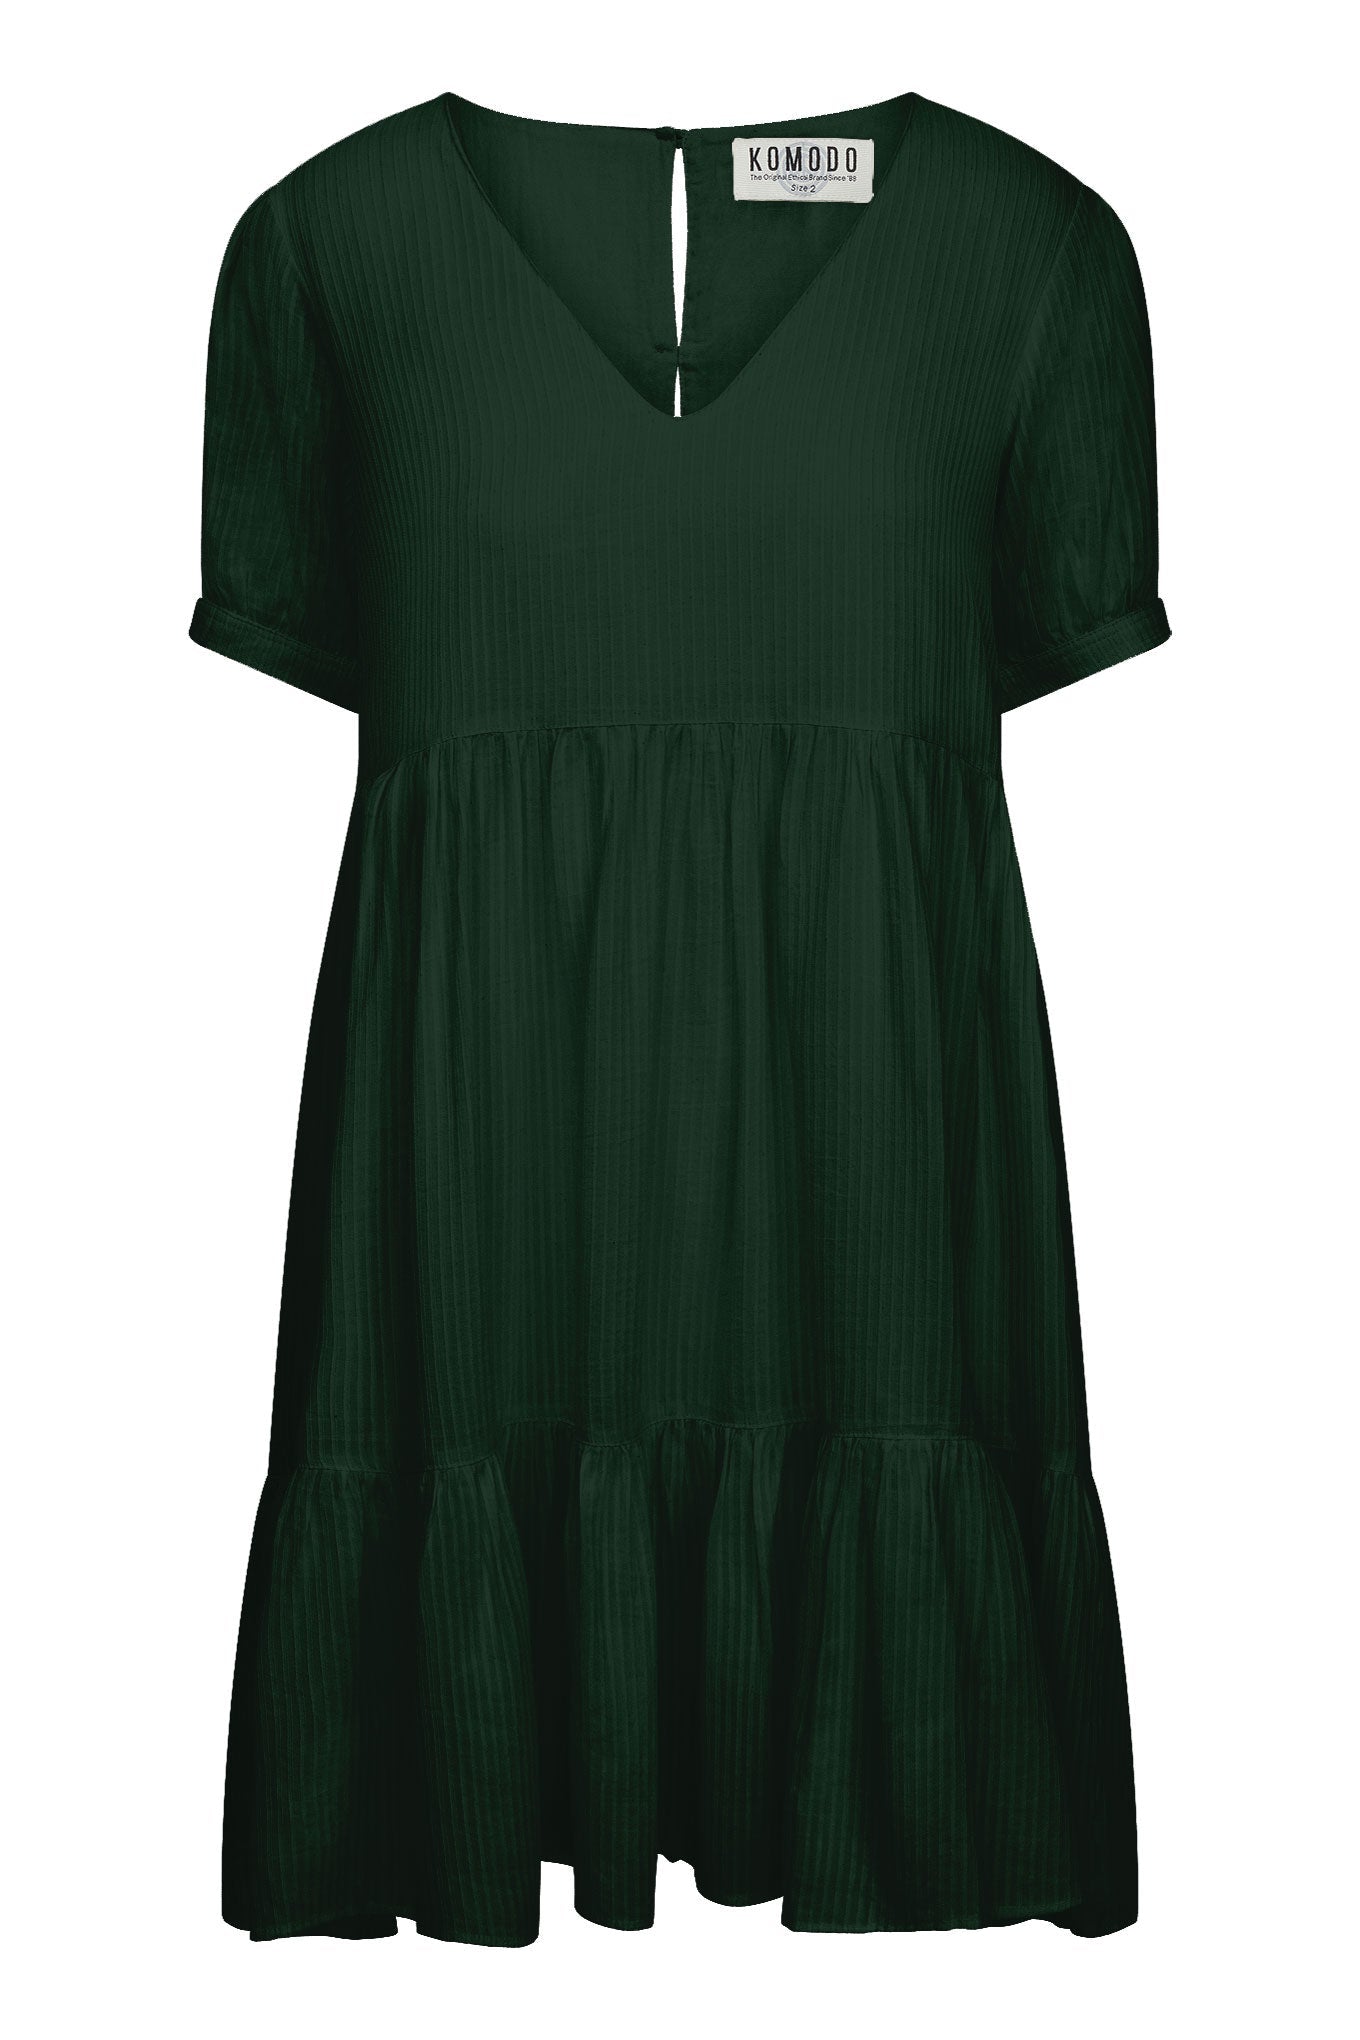 Dress - SKY Organic Cotton Tiered Mini Dress Forest Green